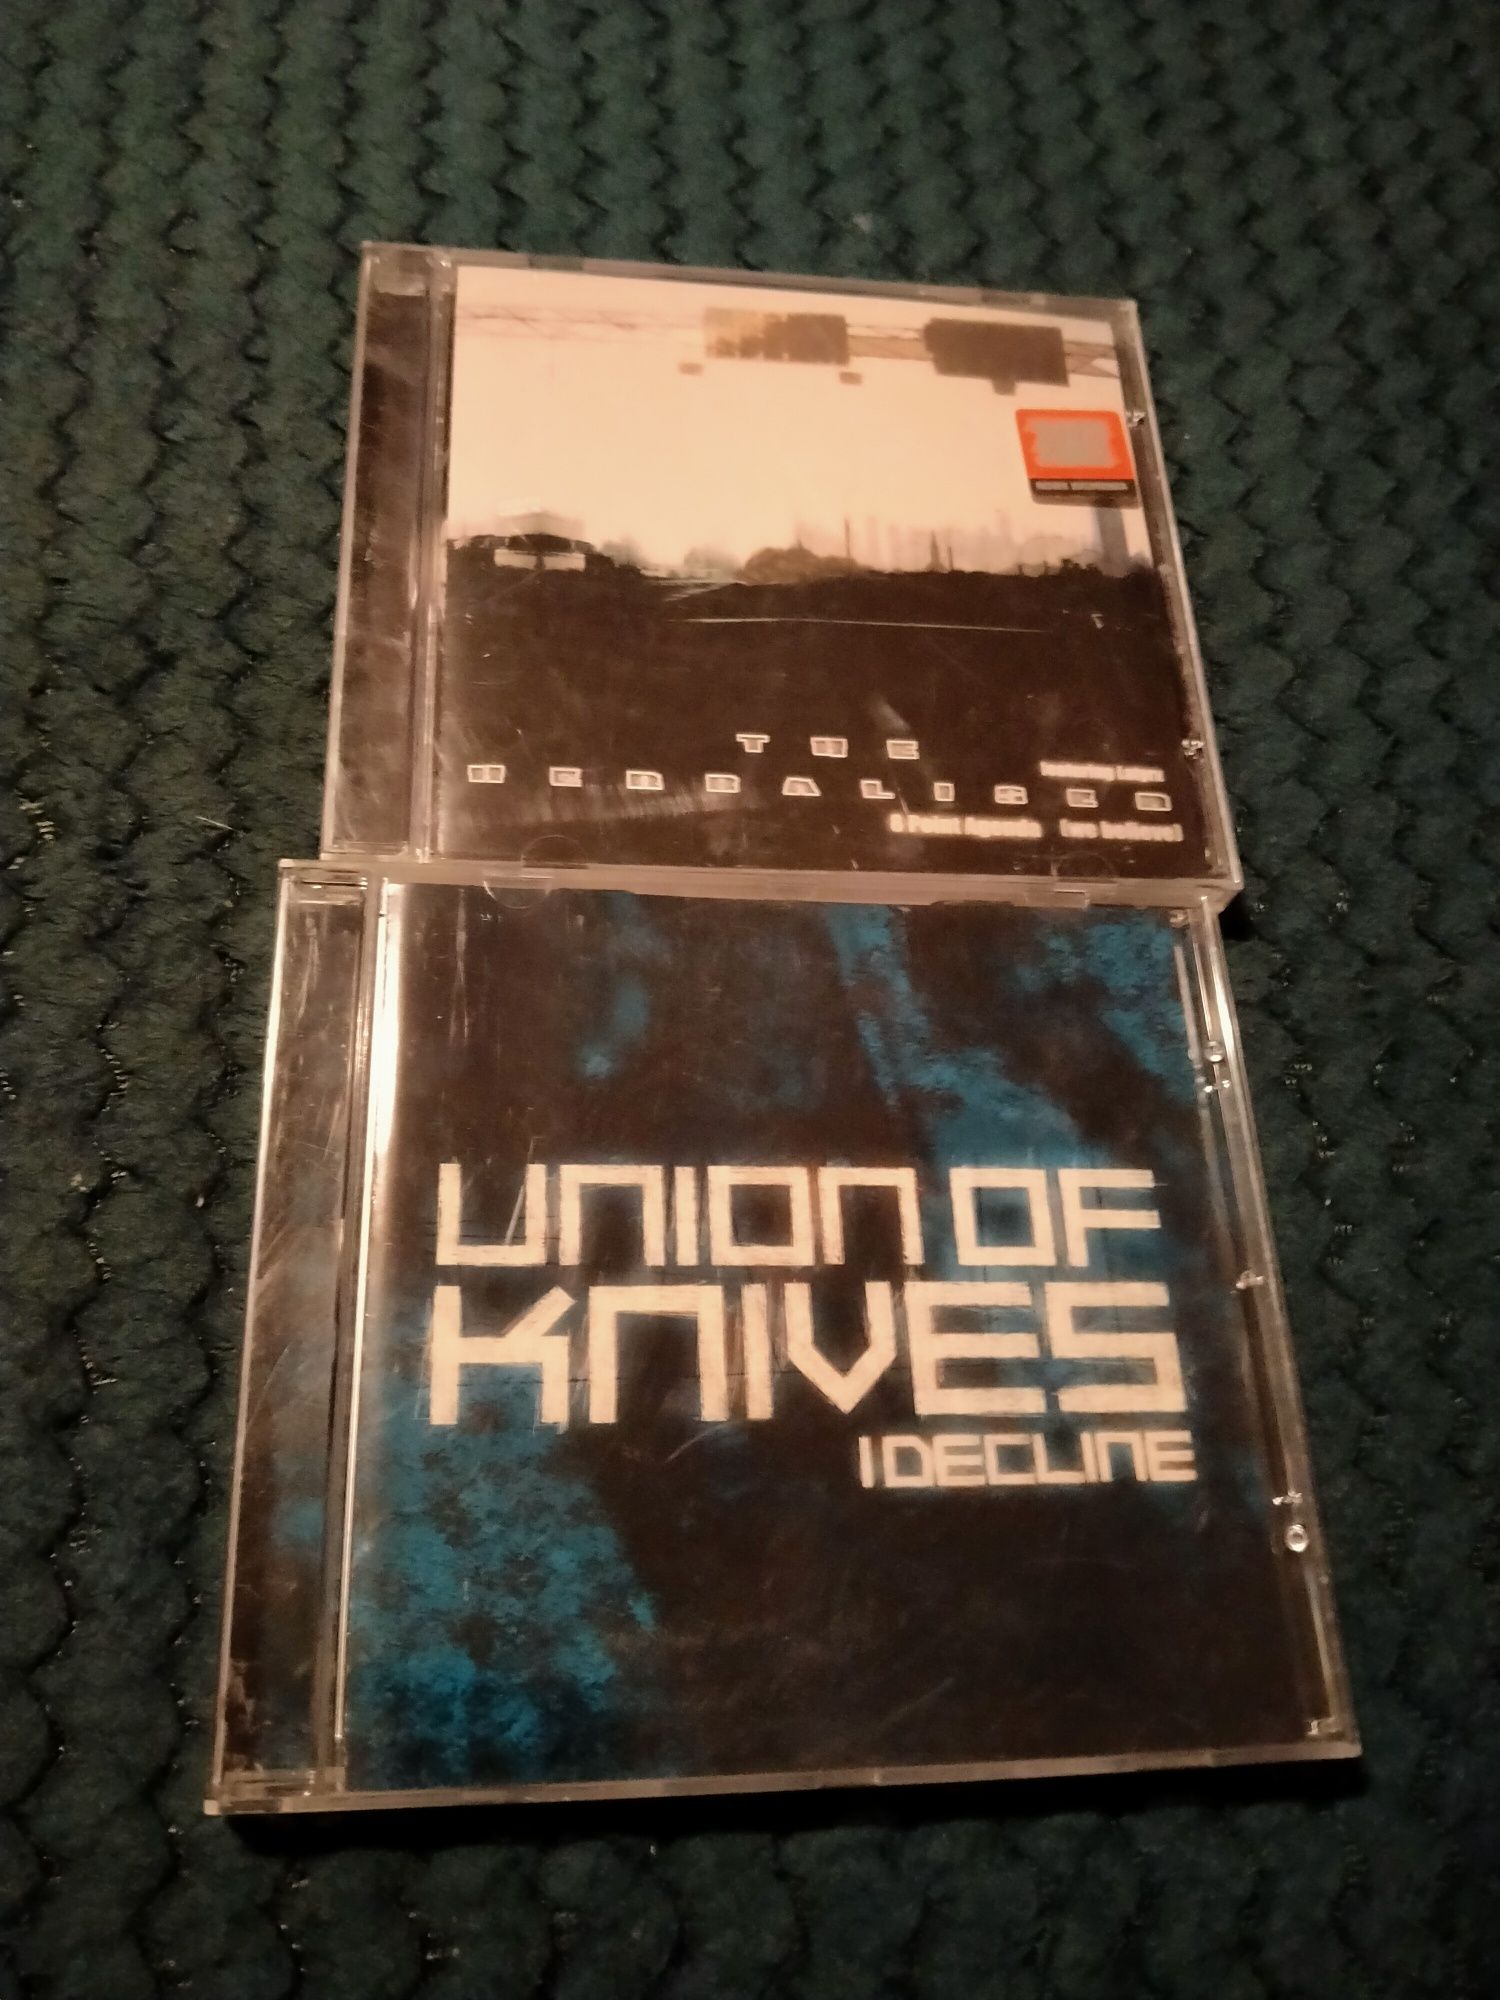 Single The Herbsliset i Union of Knives cd